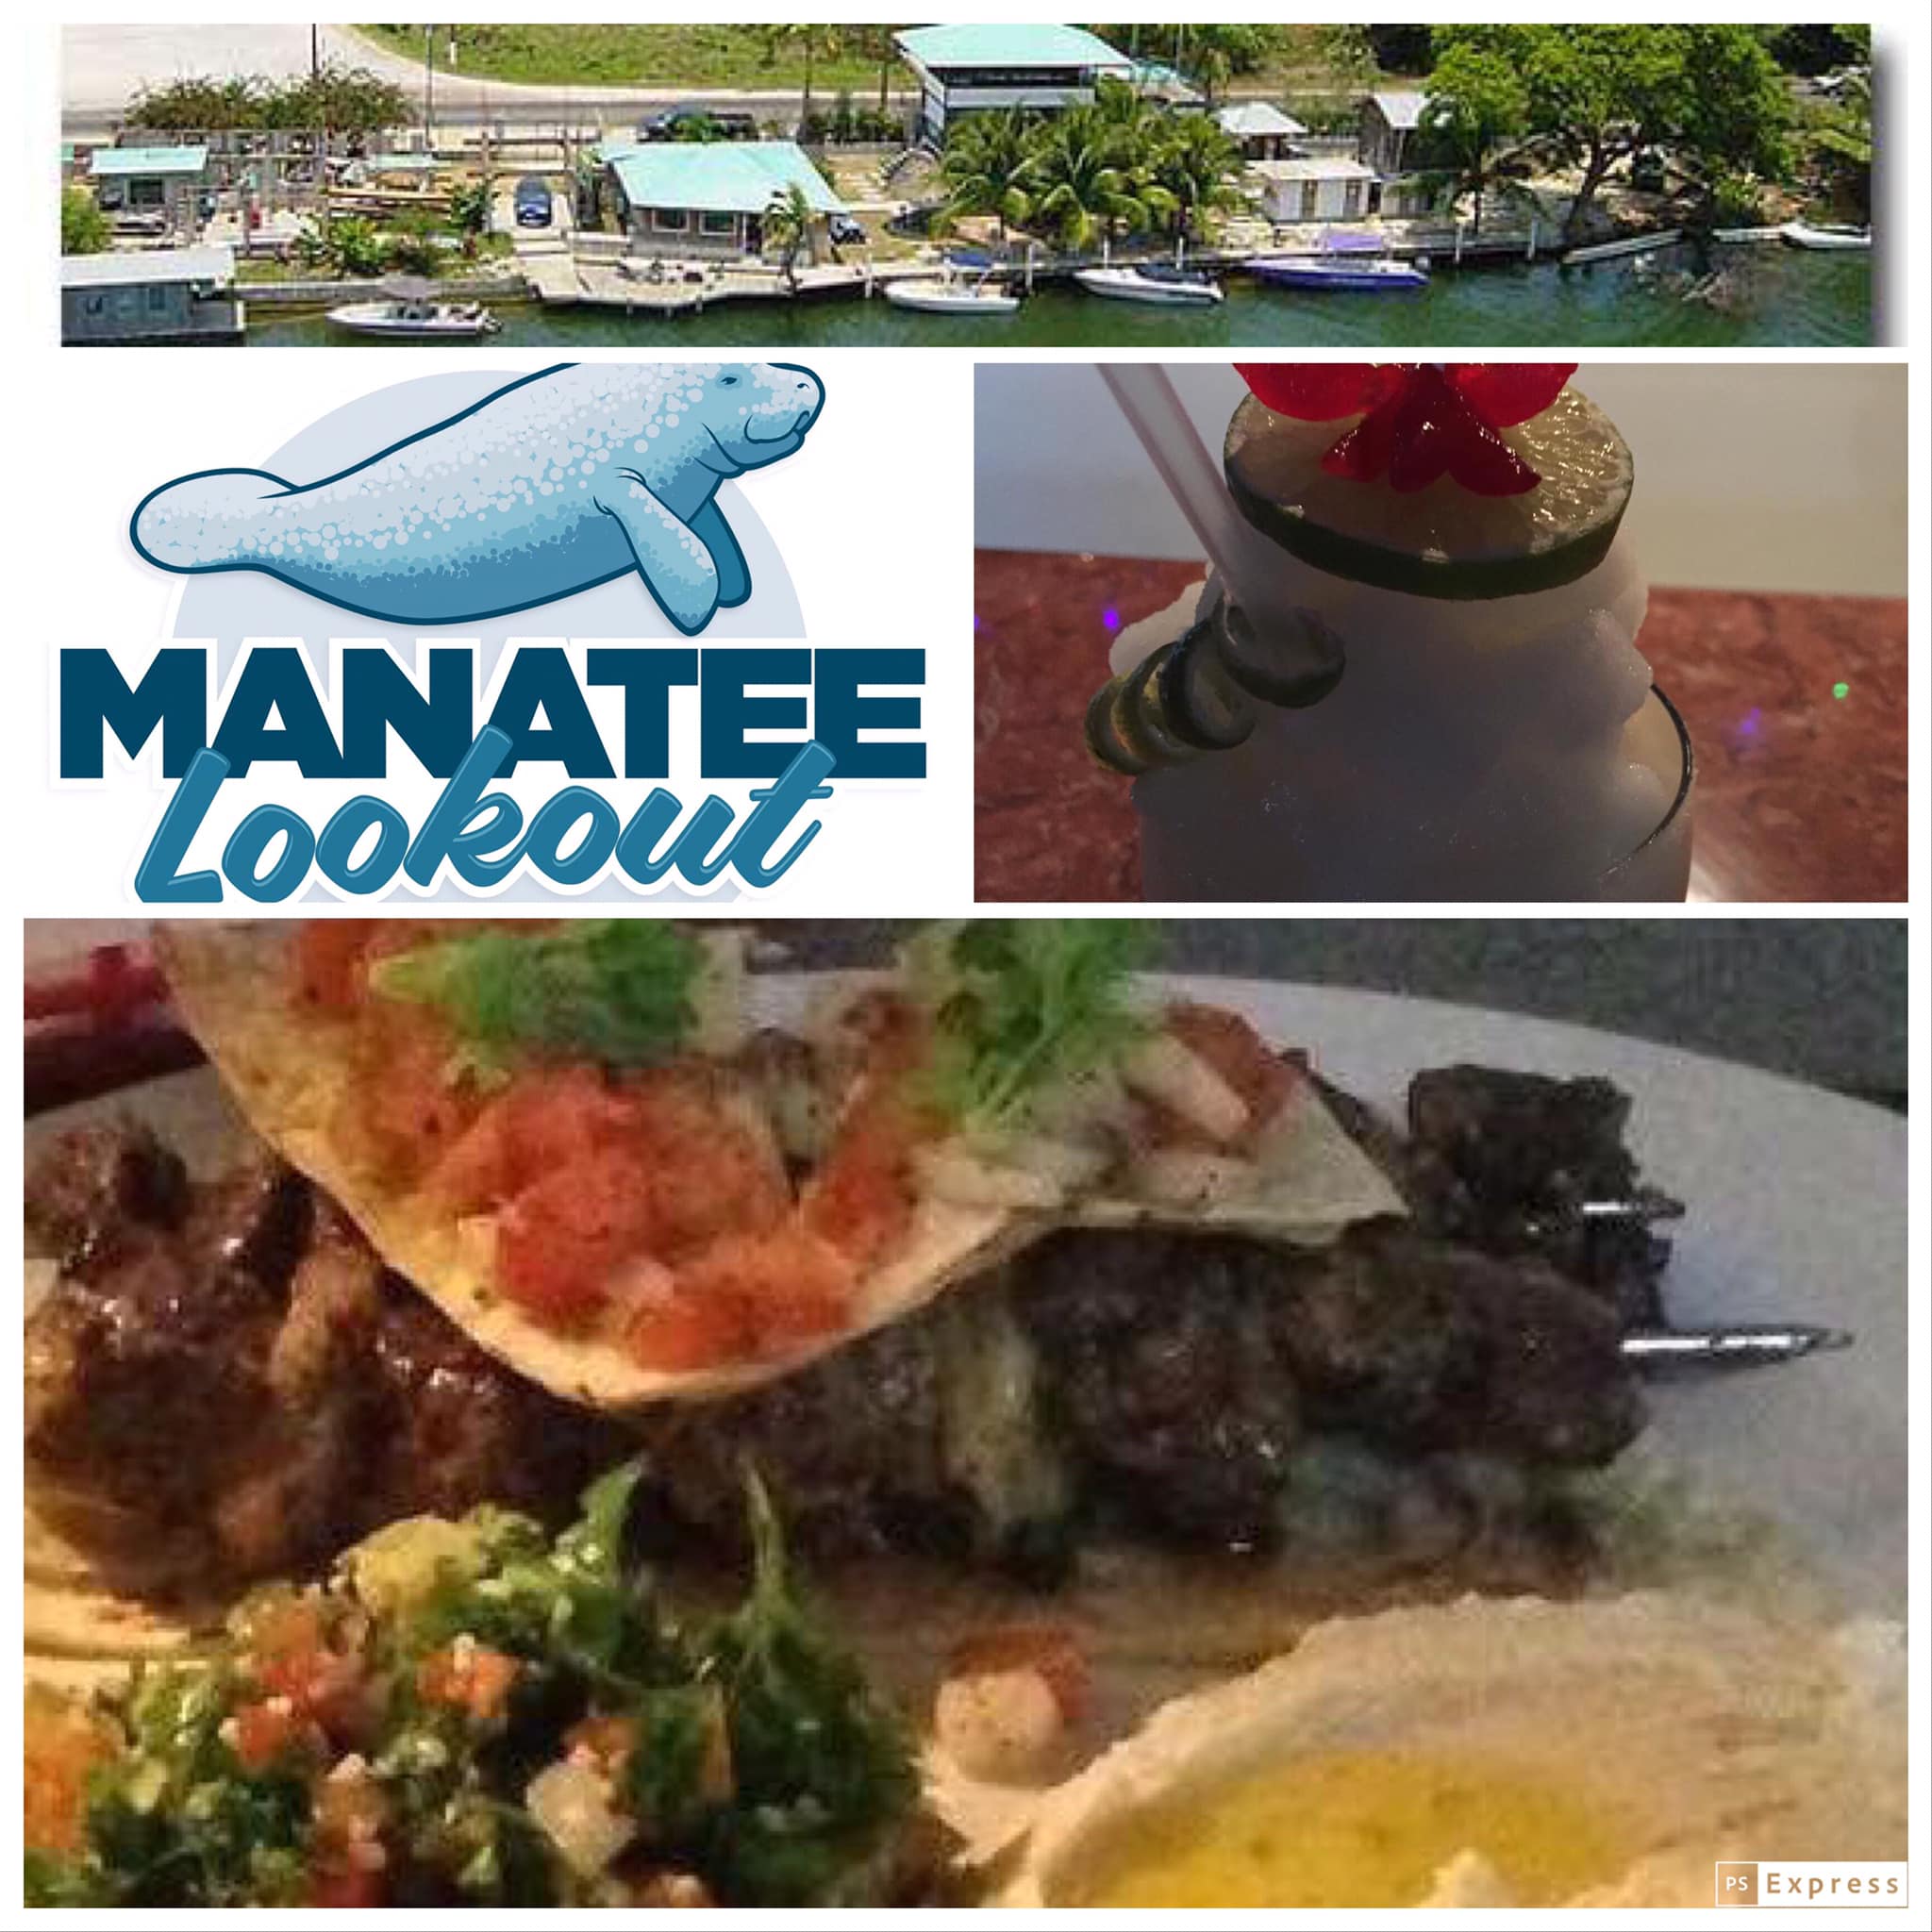 Manatee Lookout Restaurant & Bar - Belize, Central America